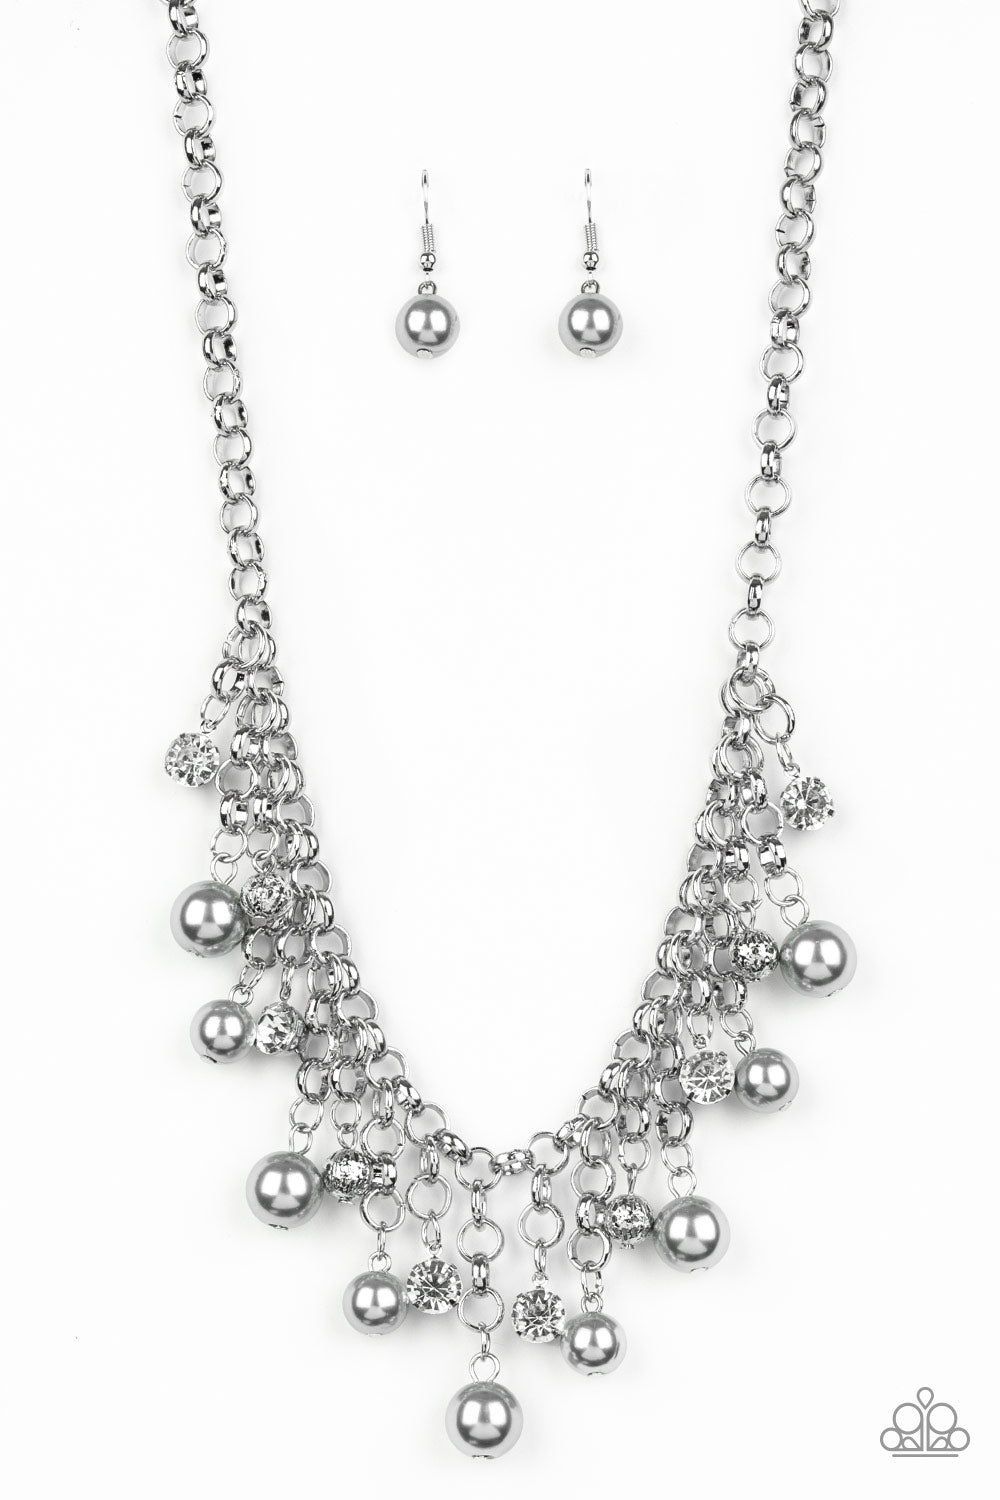 HEIR-headed - Silver necklace